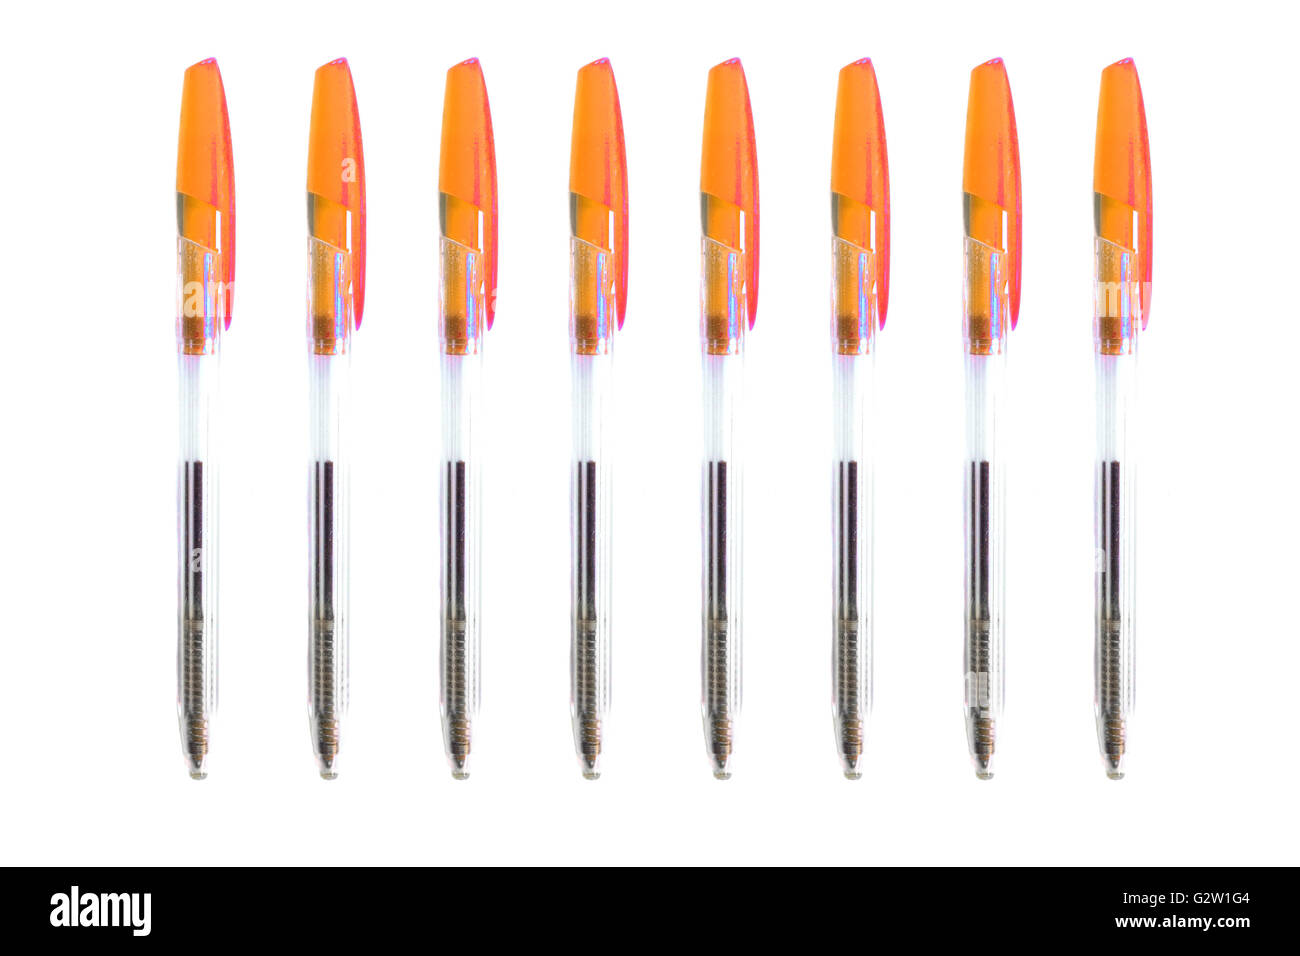 Orange biro pens photographed against a white background. Stock Photo